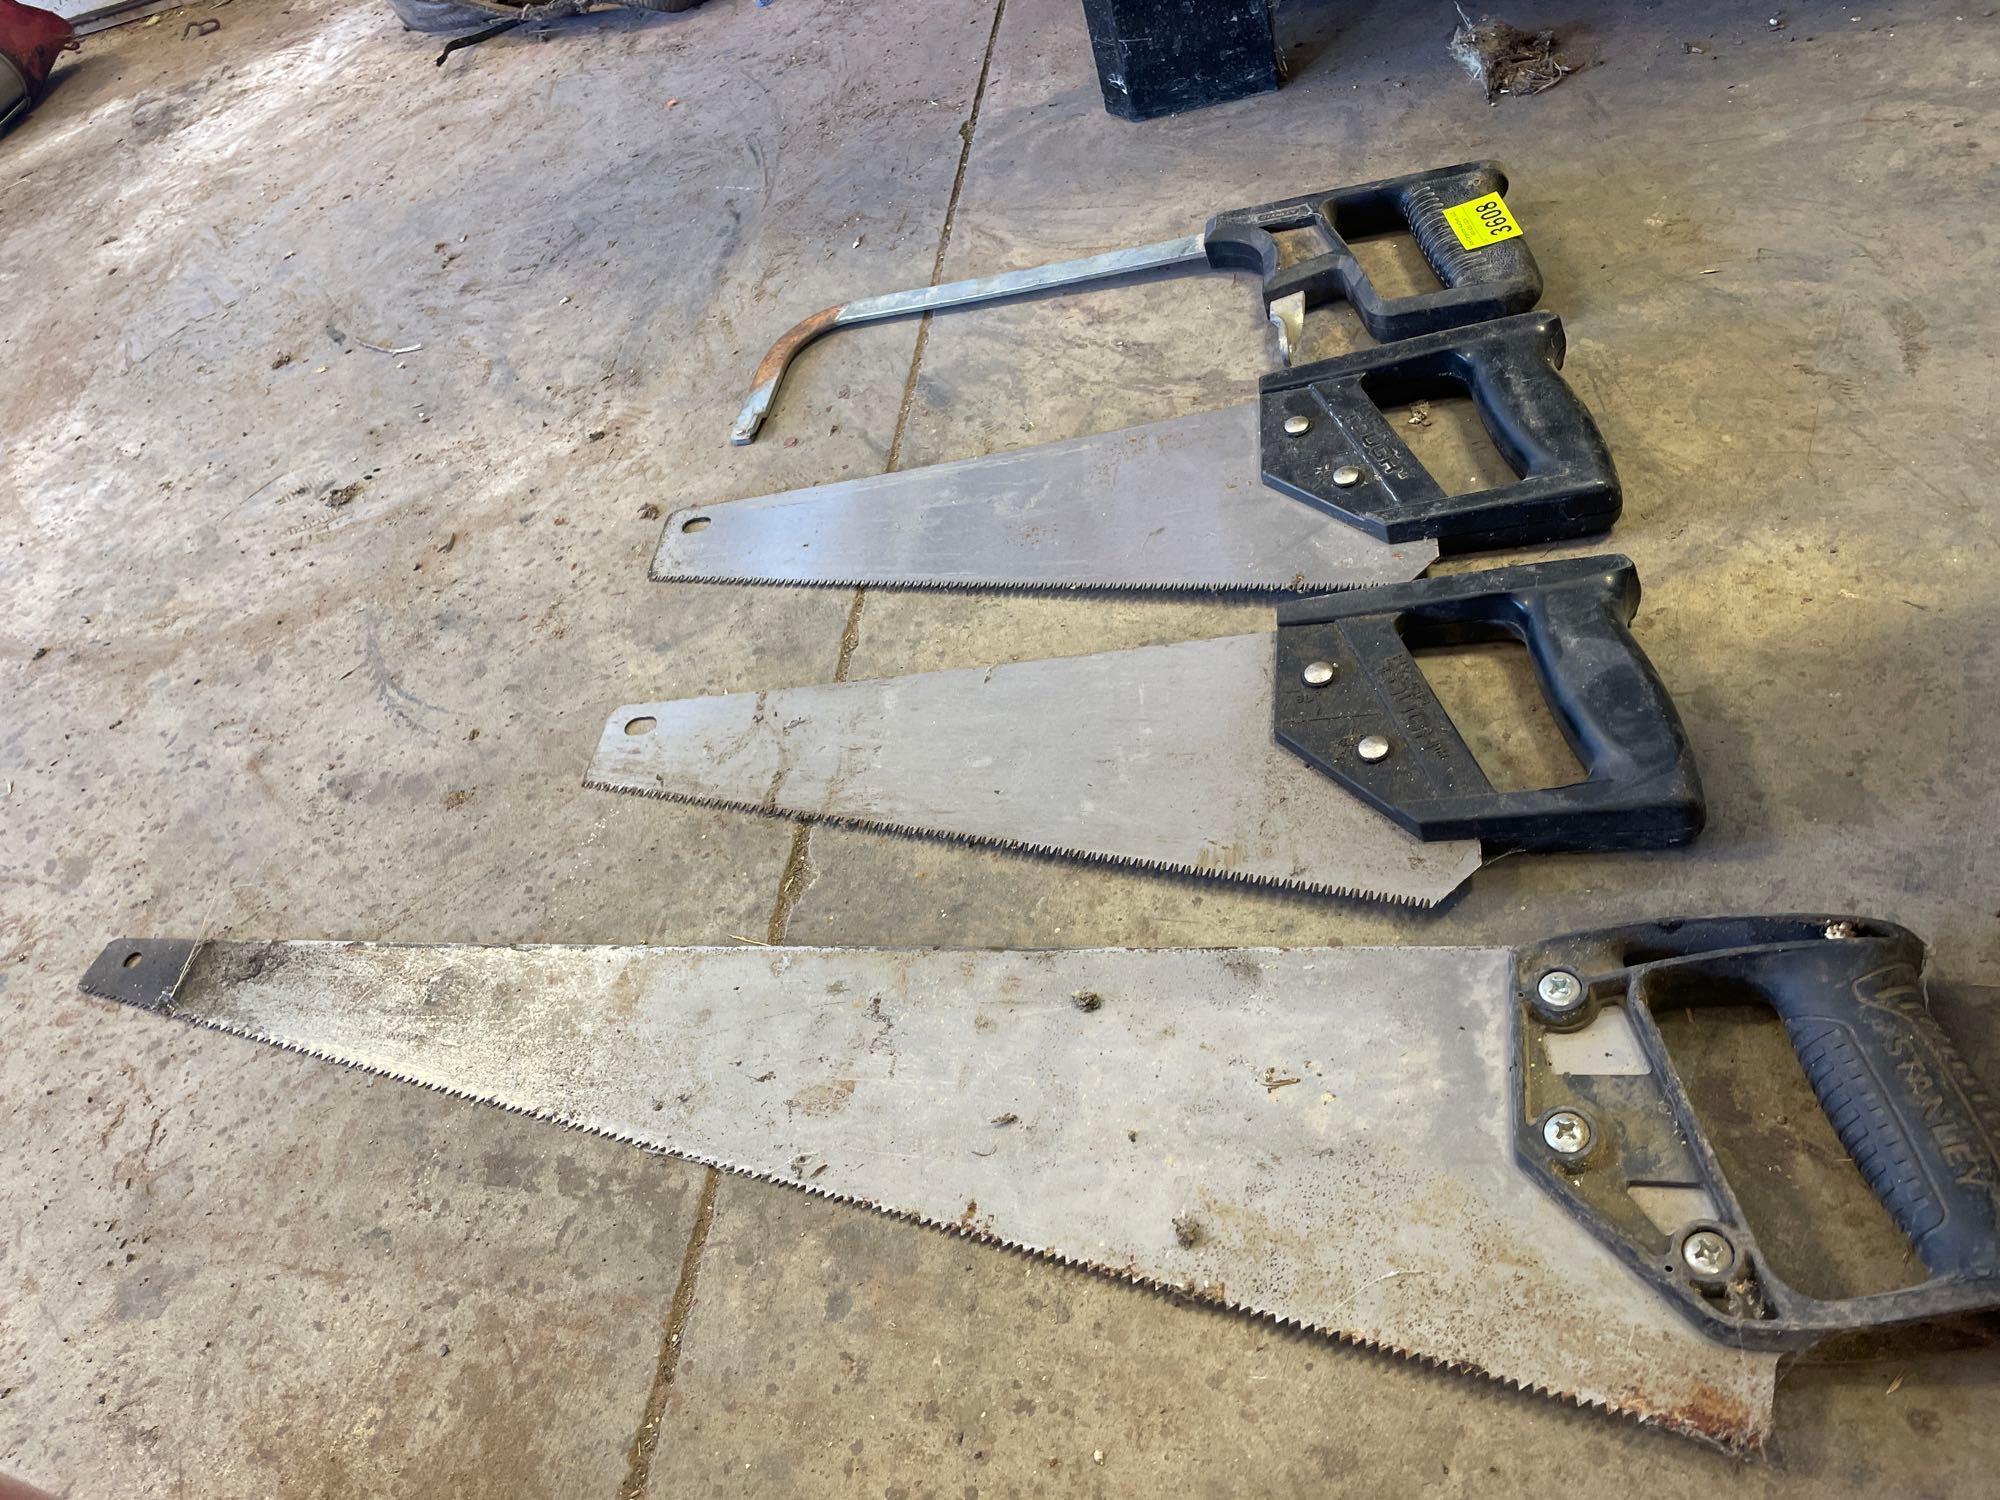 4 hand saws